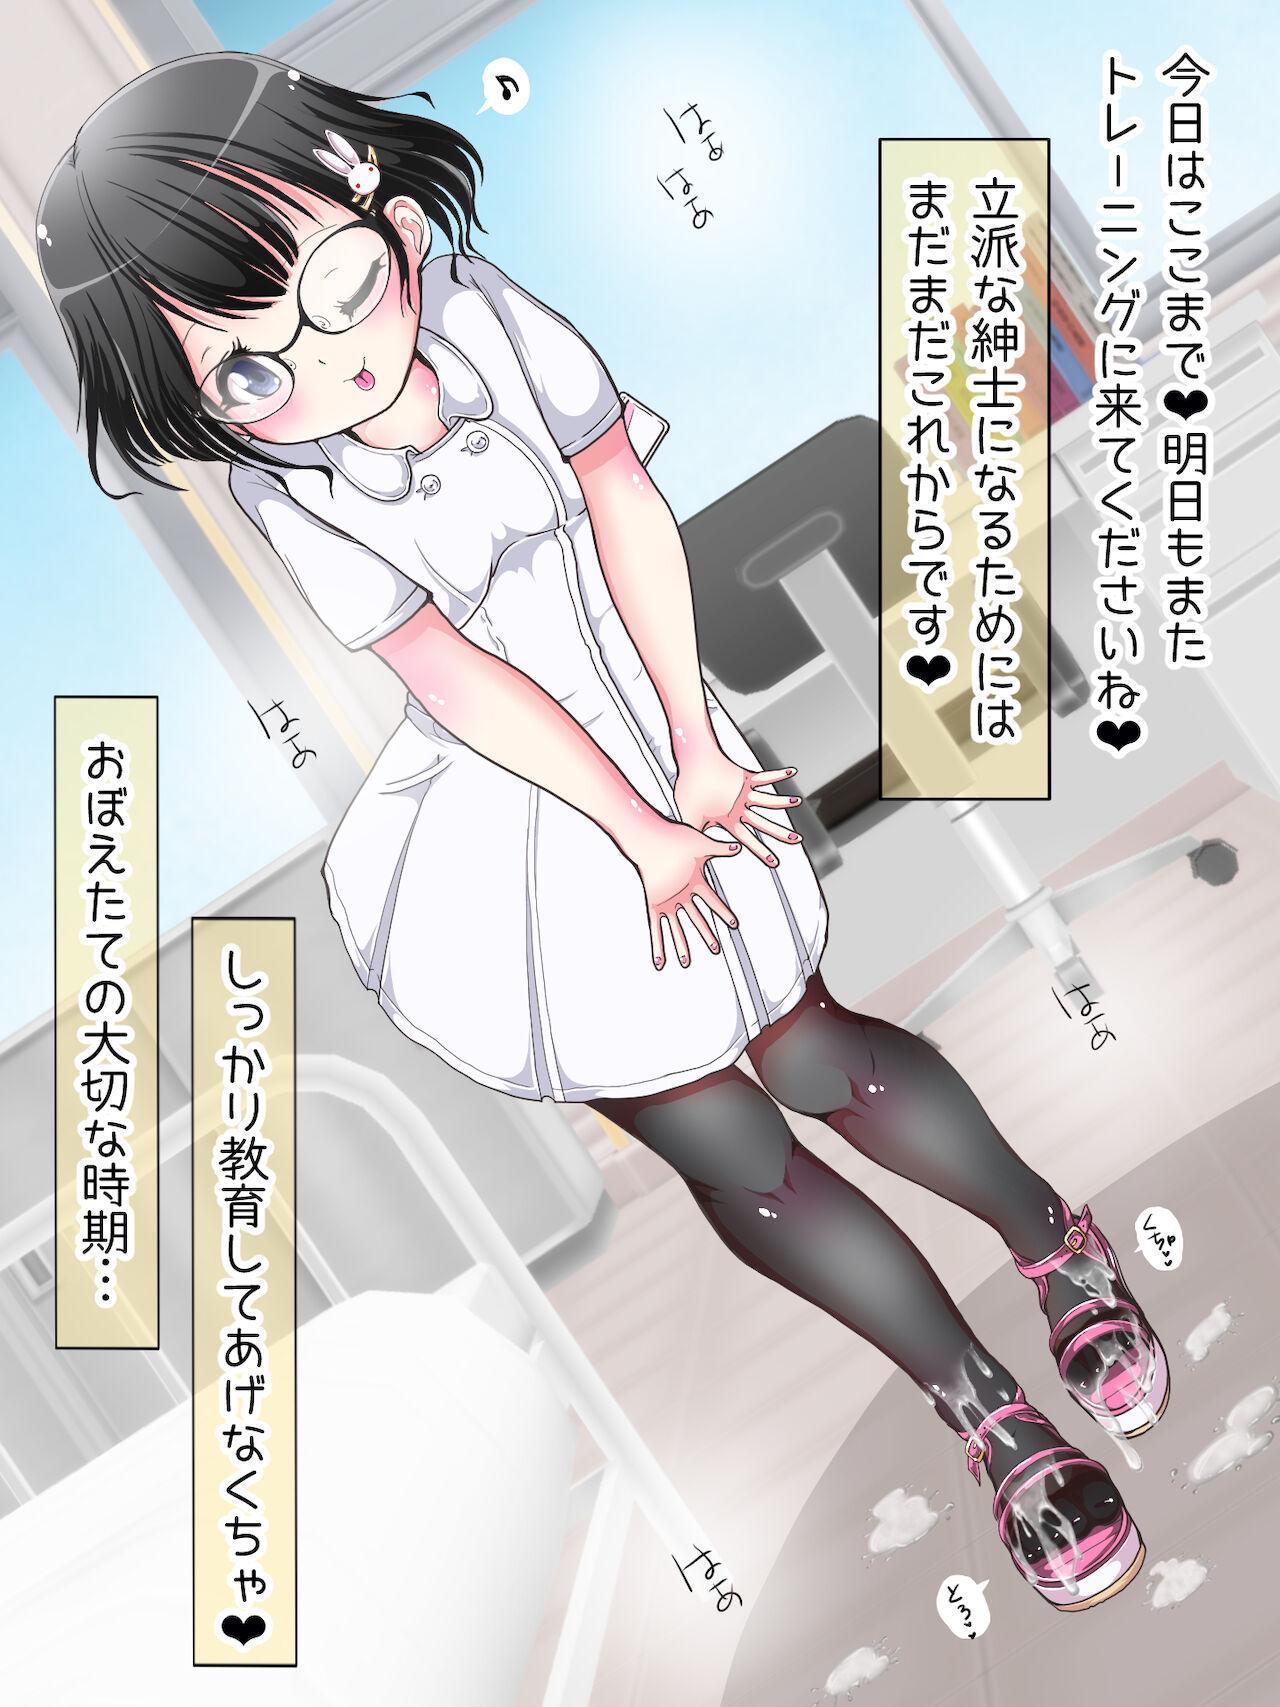 [Oneashi] One-Shota Footjob Lessons: Foot-Stroked by Nurses 221